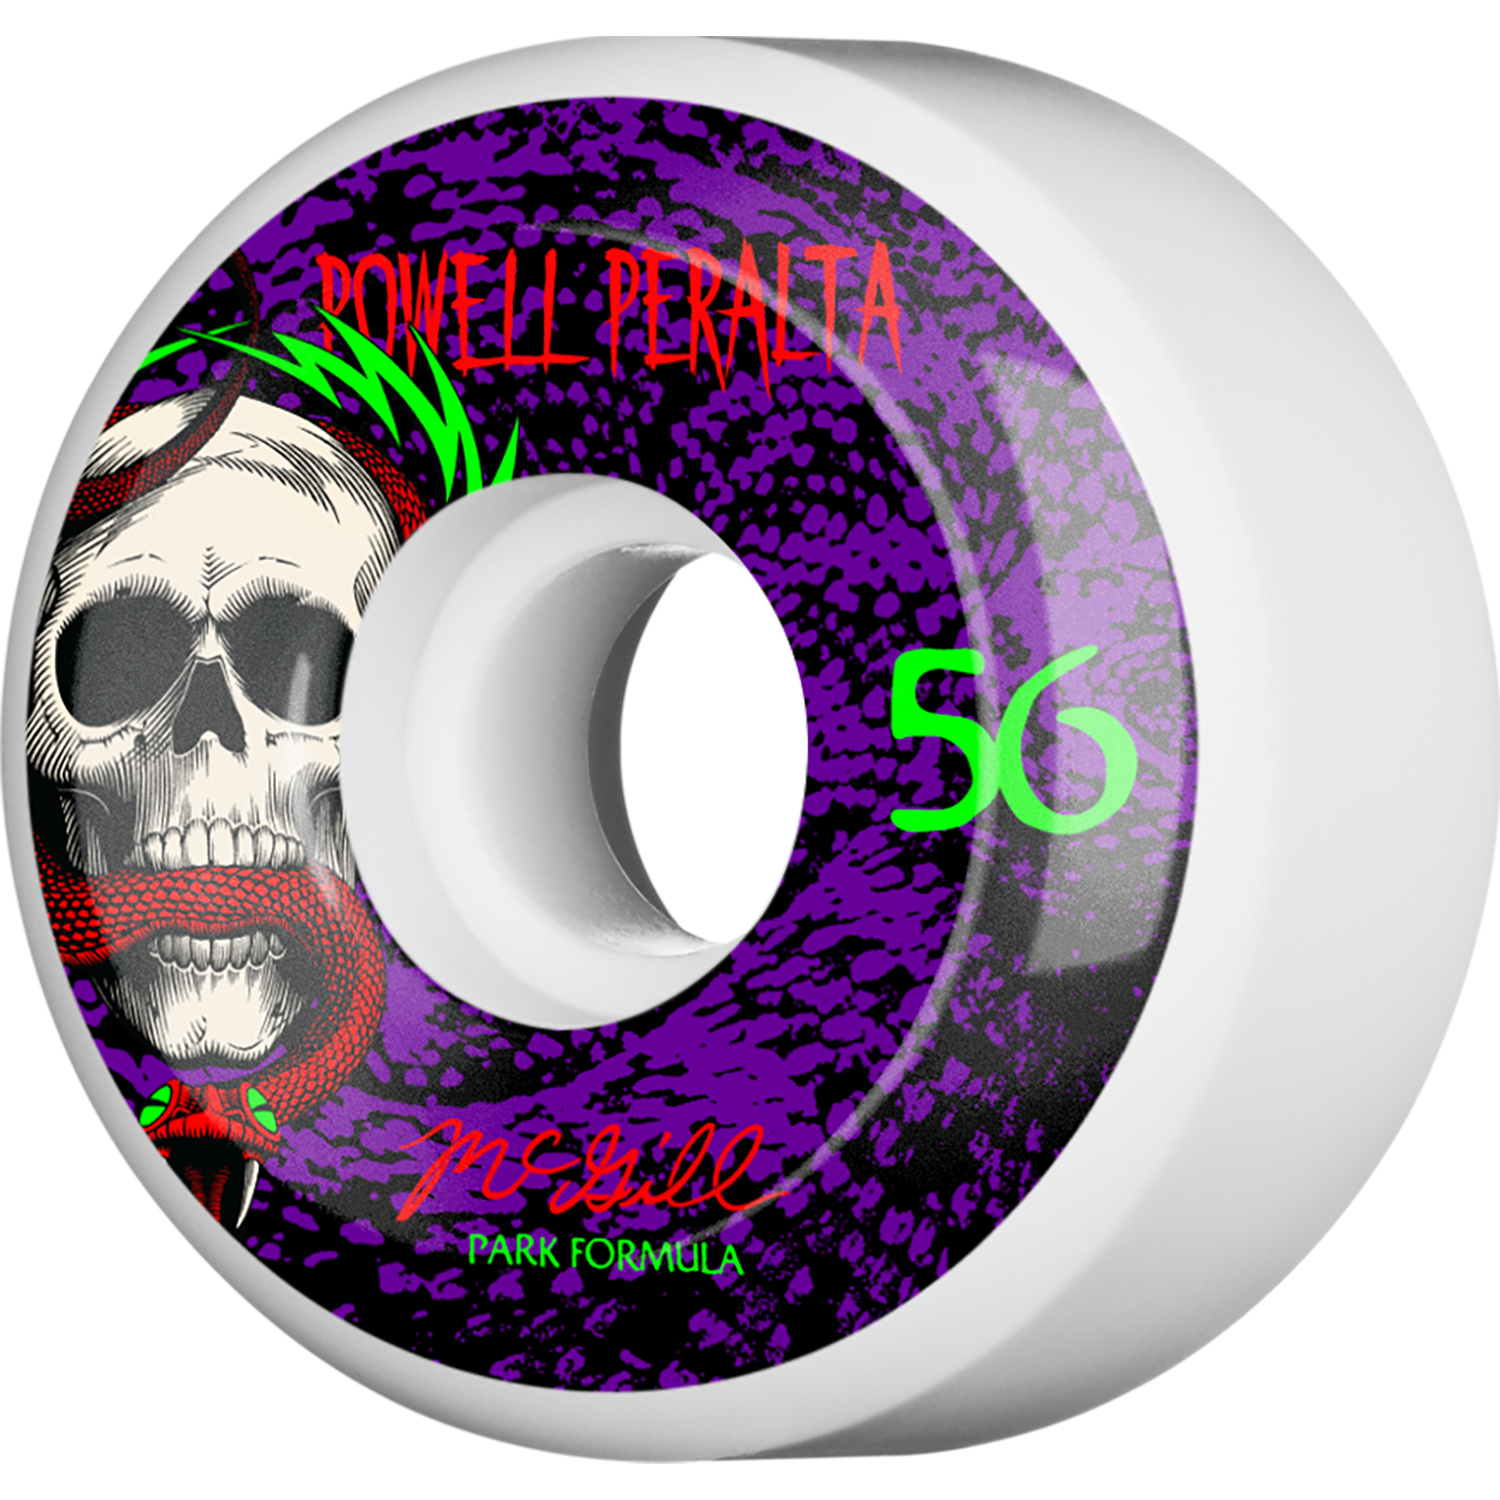 Powell Peralta Mcgill Skull & Snake 4 Pf 56mm White/Purple 103a Skateboard Wheels (Set of 4)